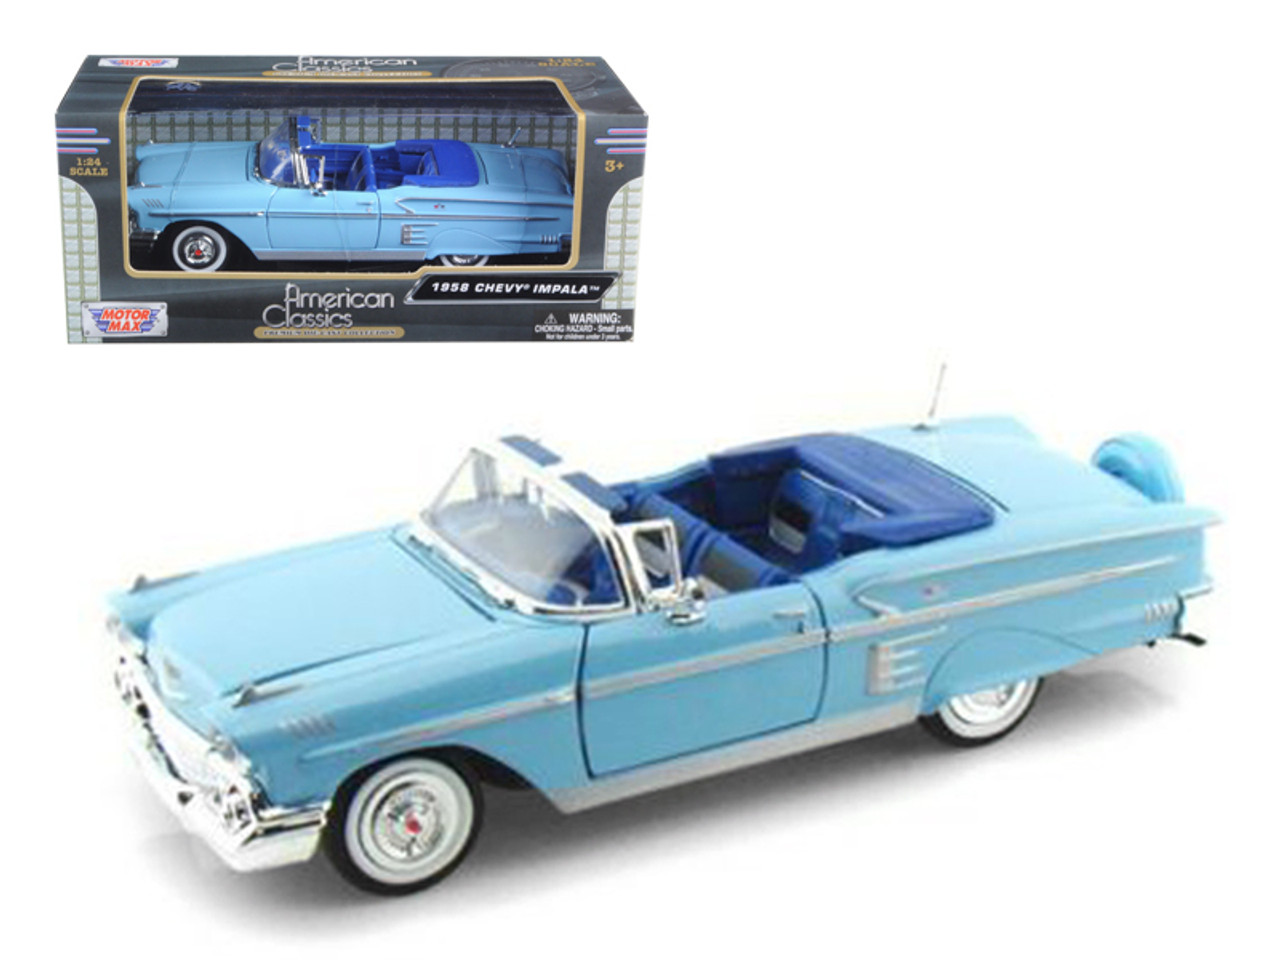 1/24 Motormax 1958 Chevrolet Chevy Impala Blue Diecast Car Model